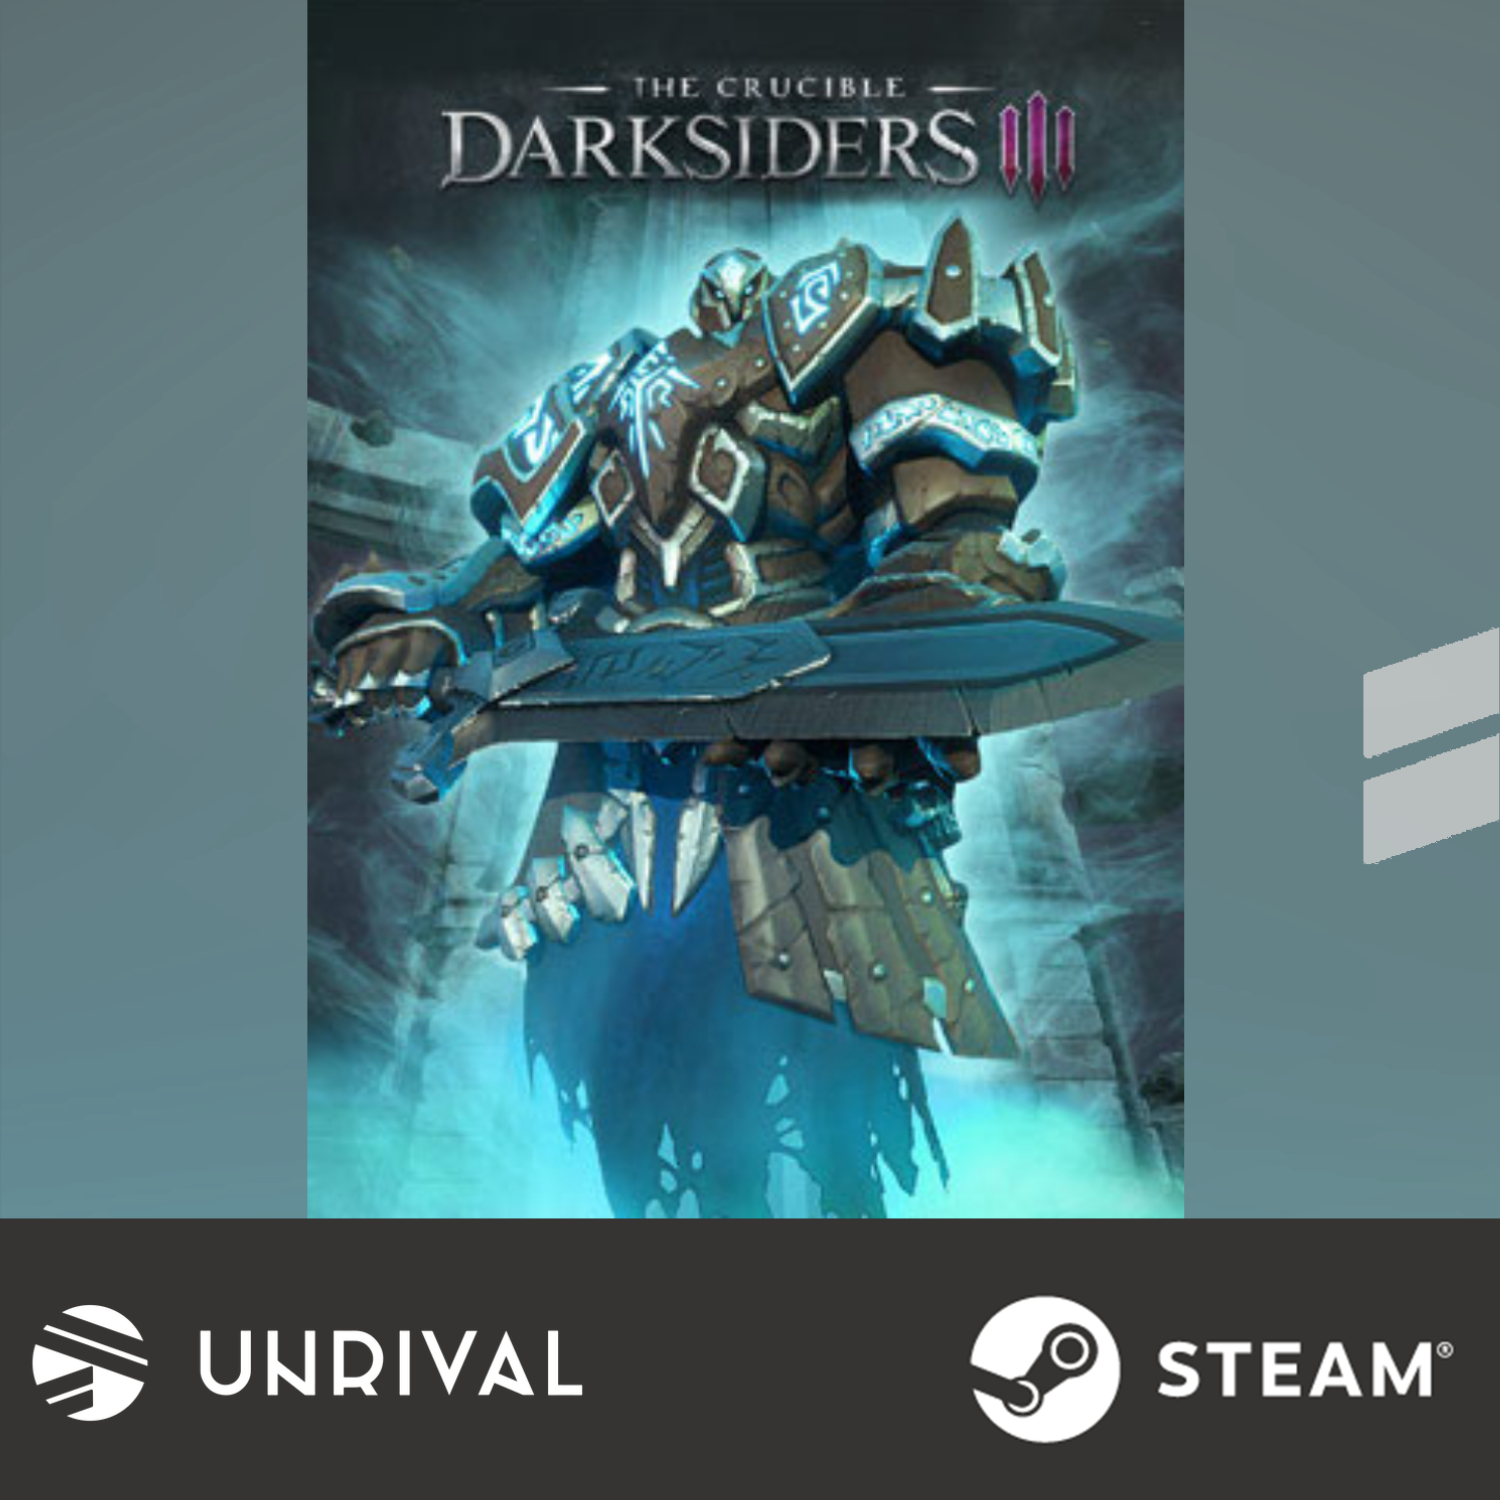 Darksiders III - The Crucible (DLC) PC Digital Download Game - Unrival